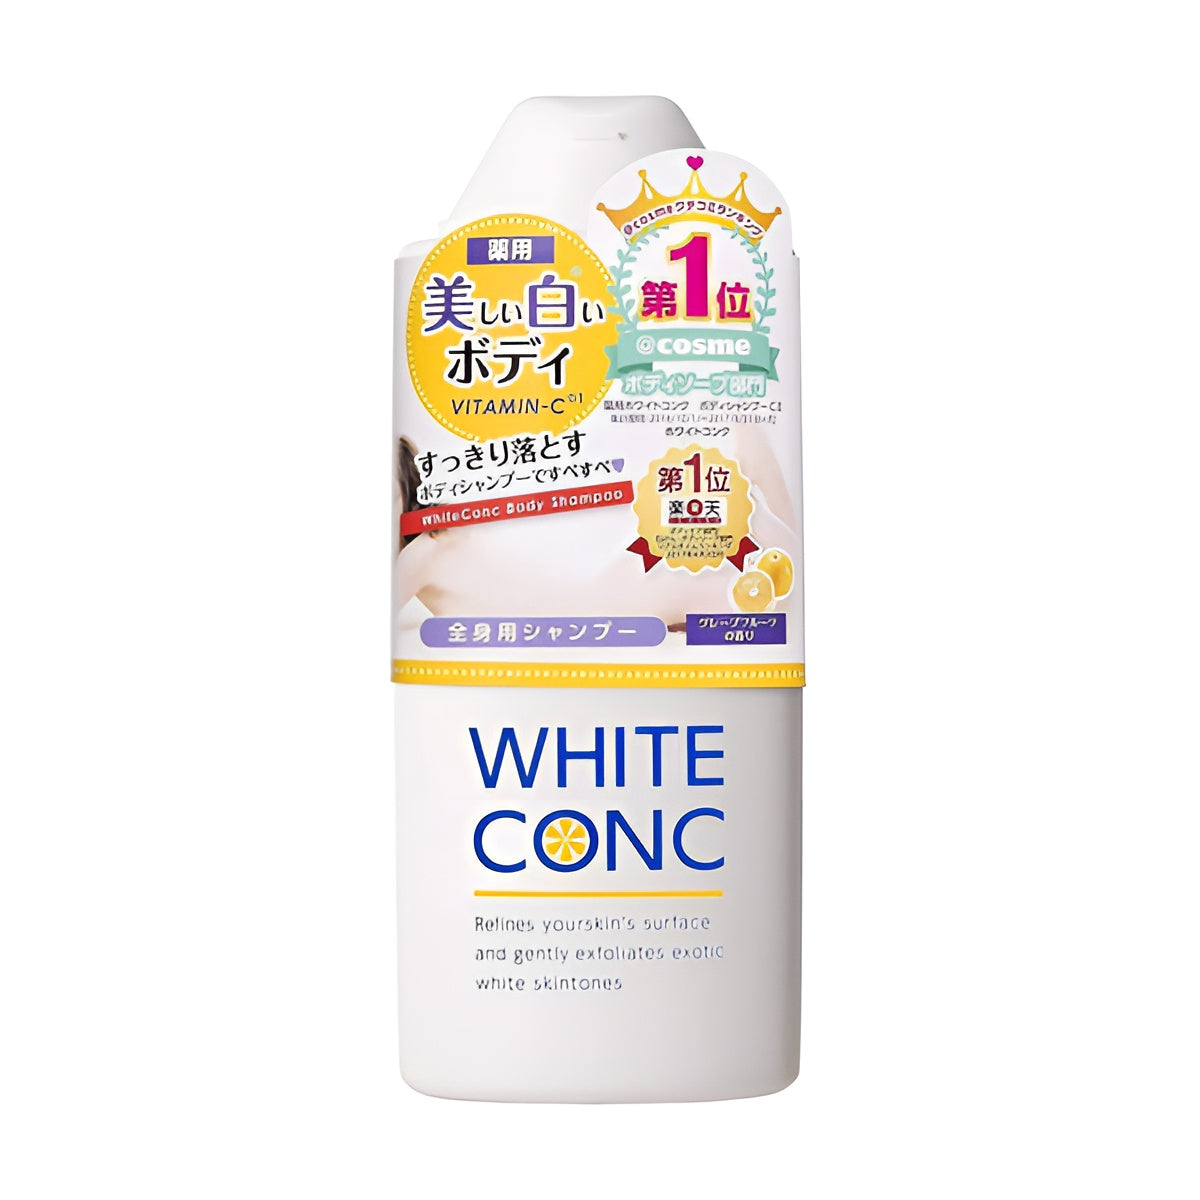 White Conc Body Shampoo 360ml